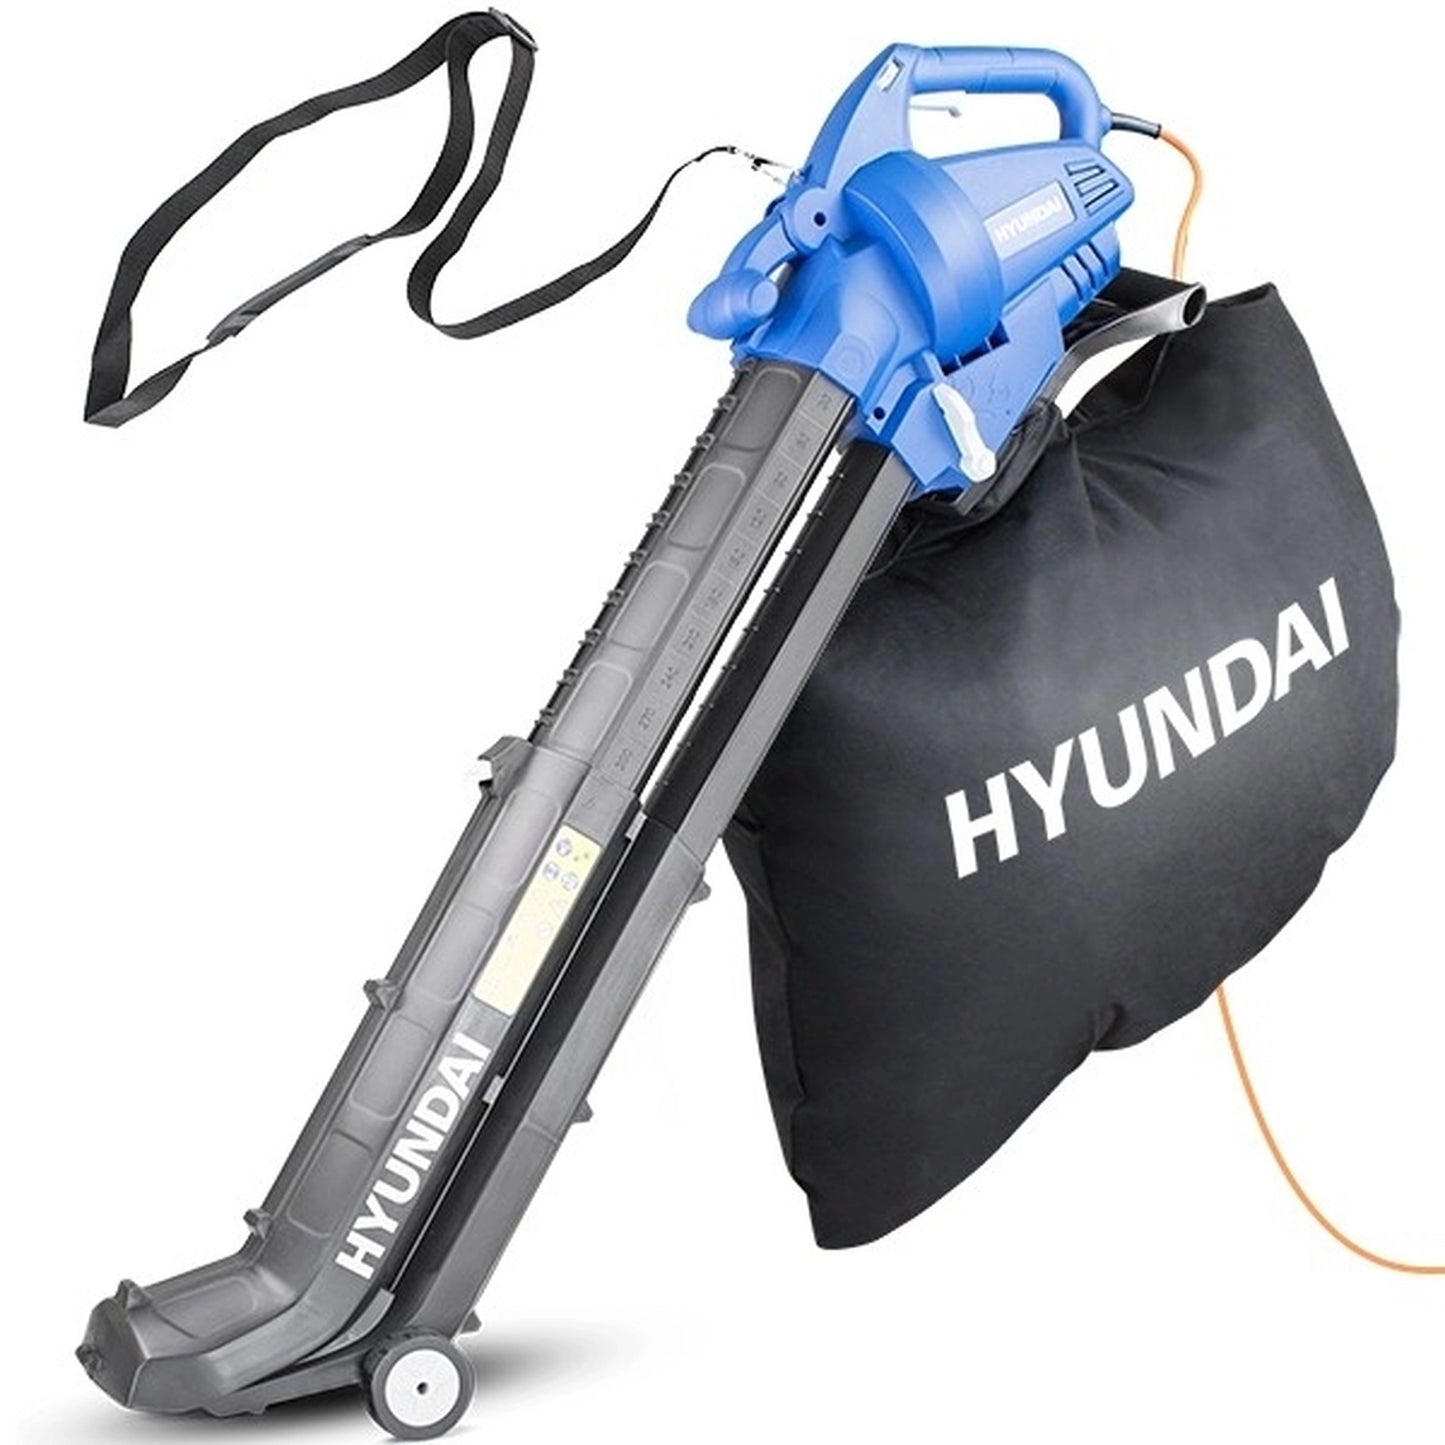 Hyundai HYBV3000E 3-in-1 Electric Garden Vac, Blower & Mulcher